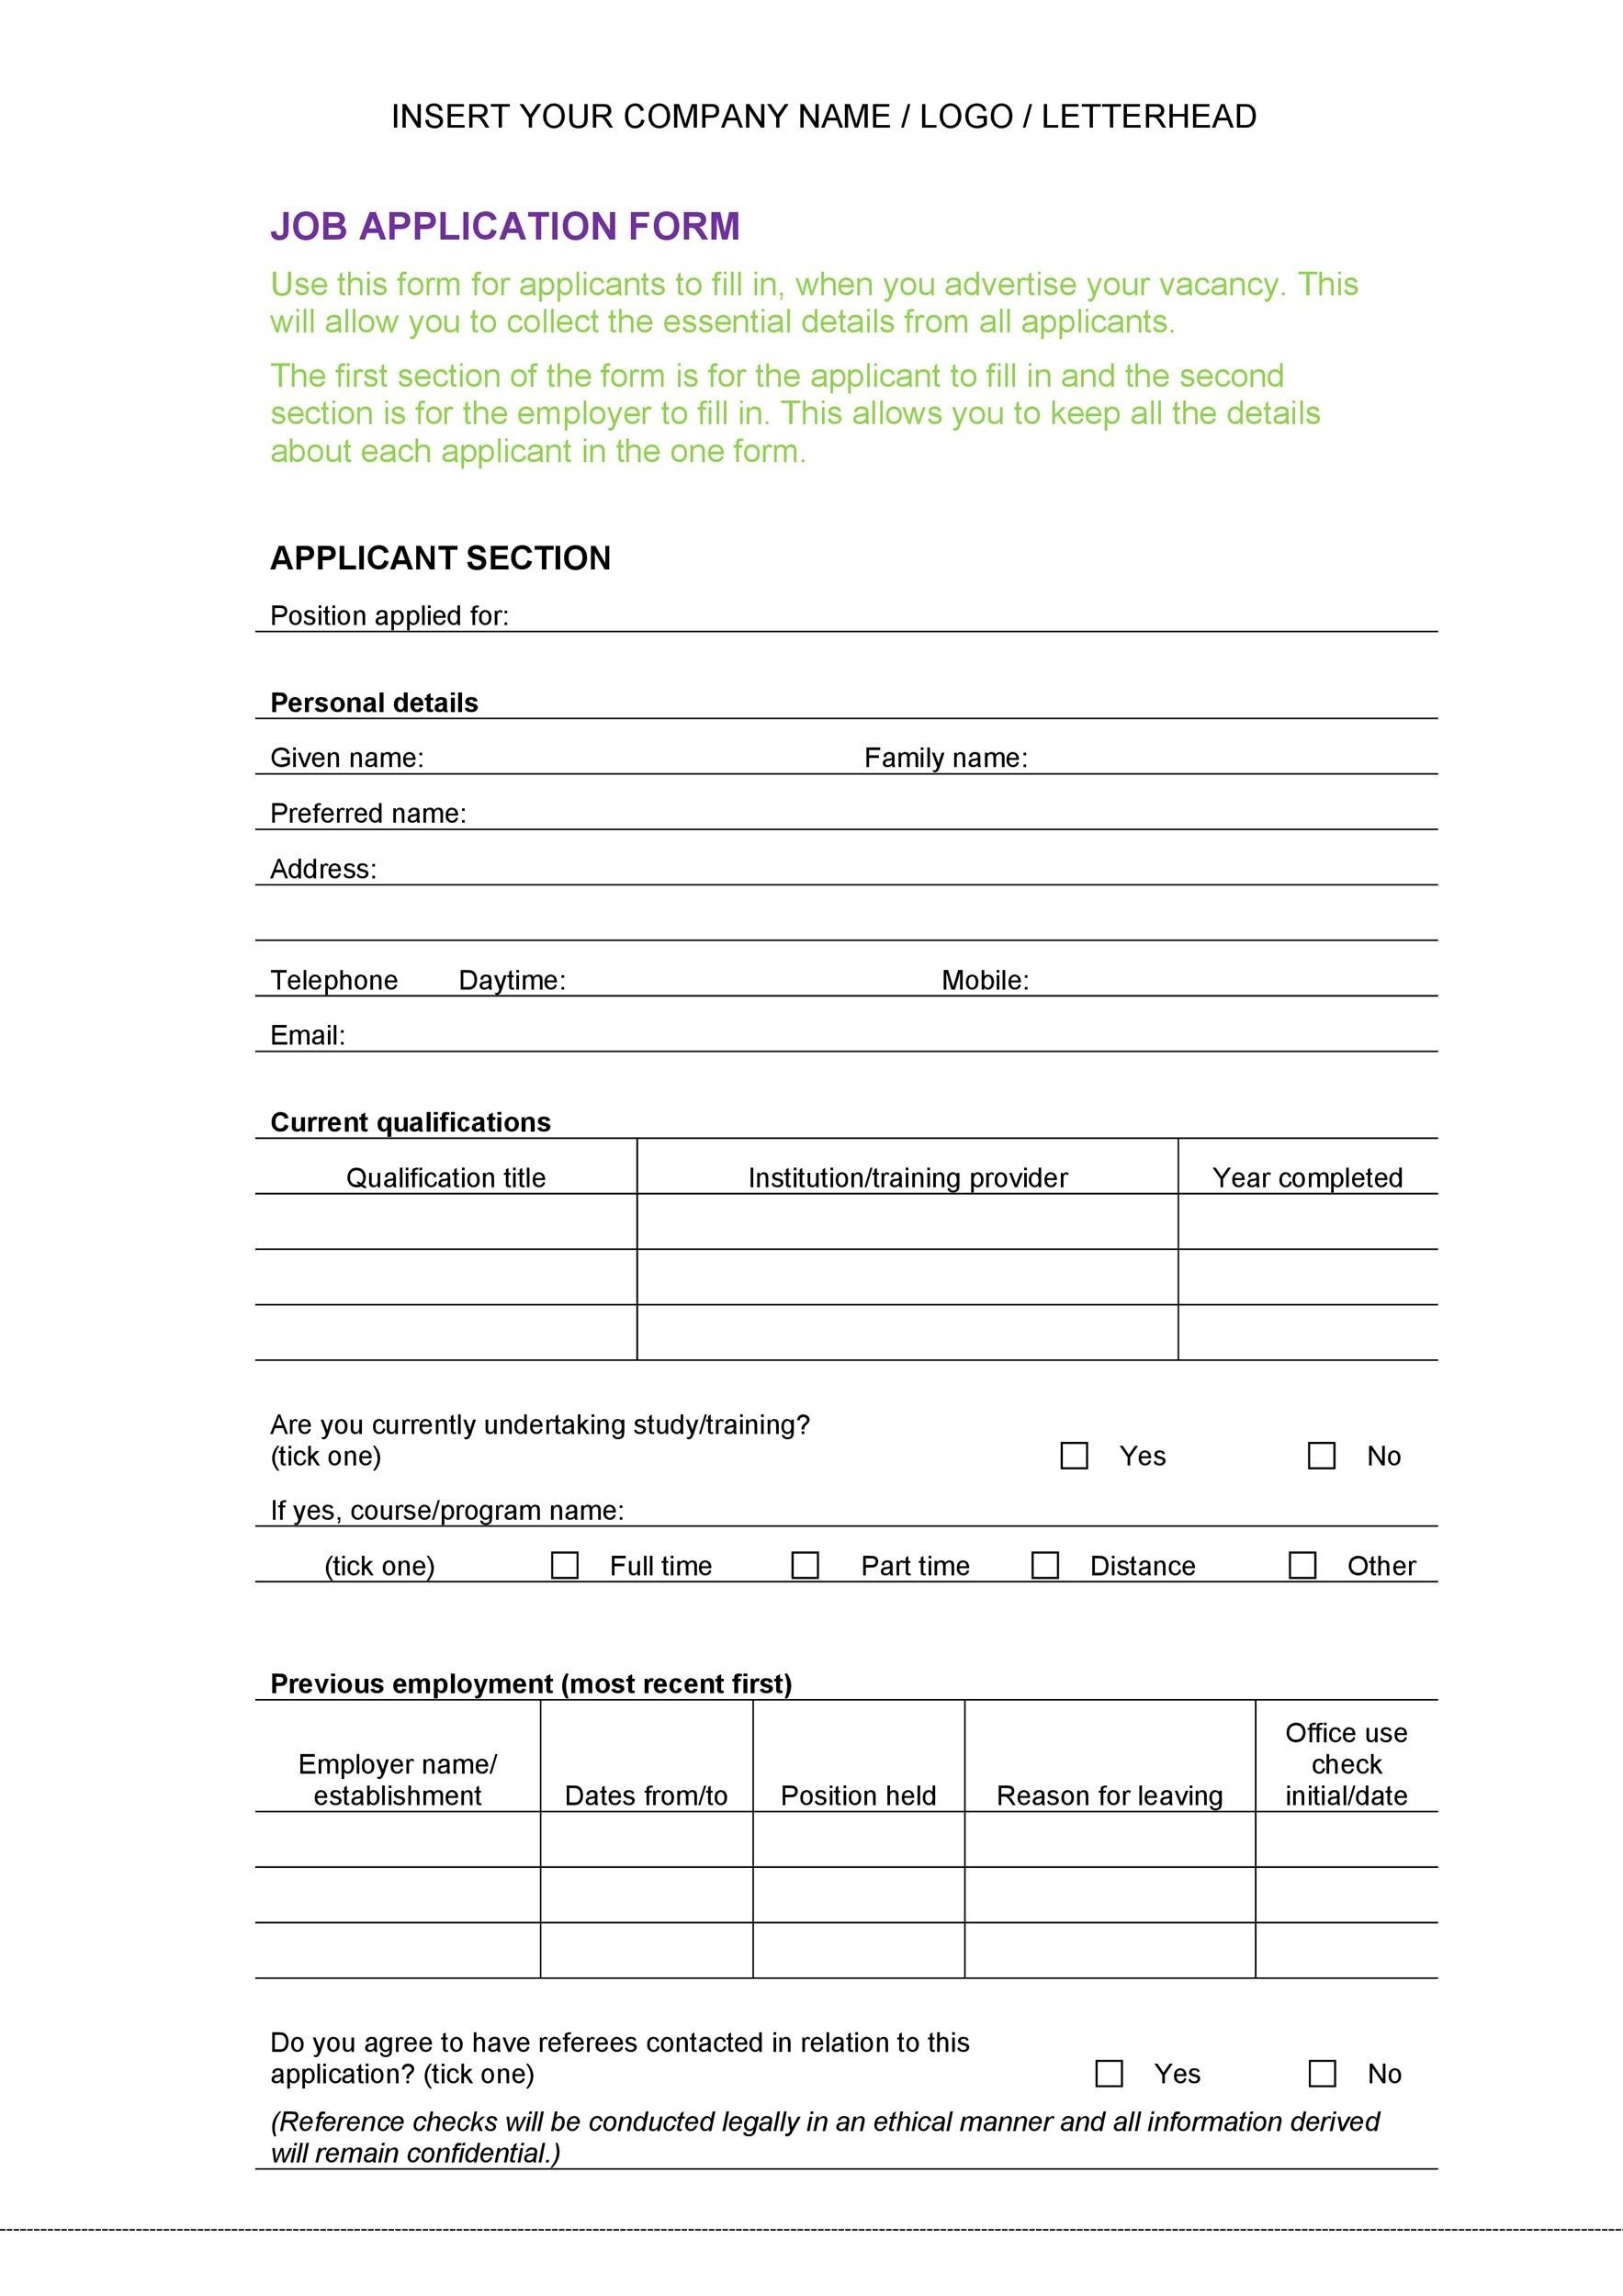 50 Free Employment Job Application Form Templates Printable Templatelab 8953